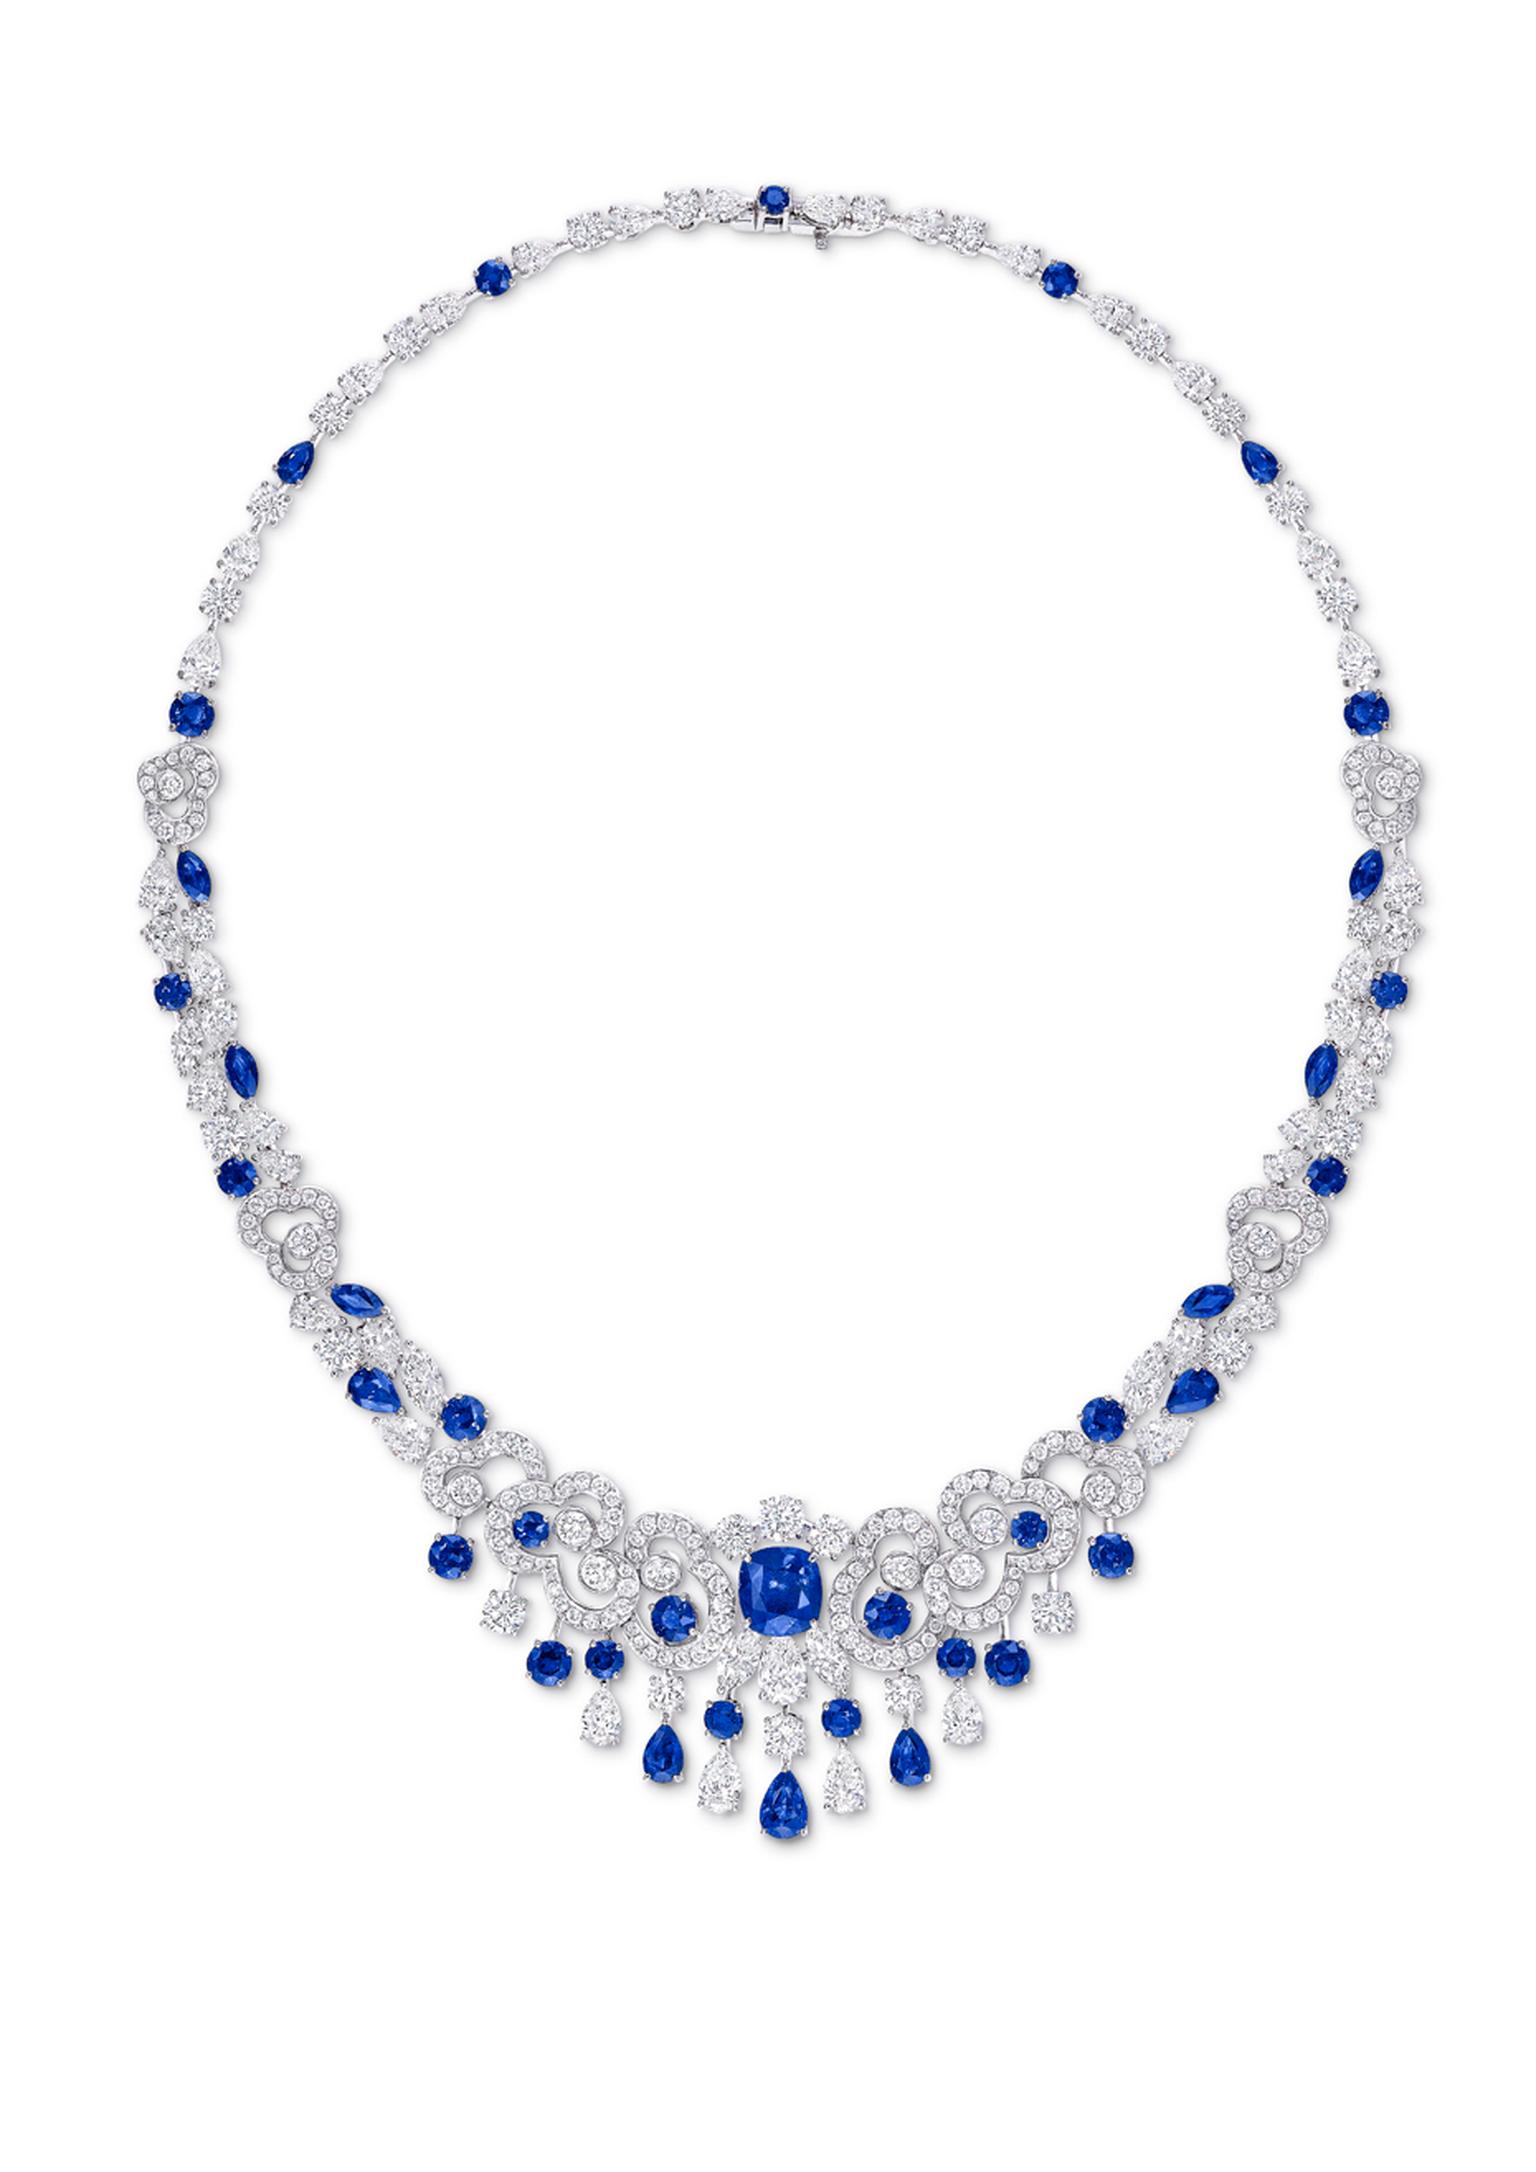 Graff's sparkling diamond necklaces | The Jewellery Editor